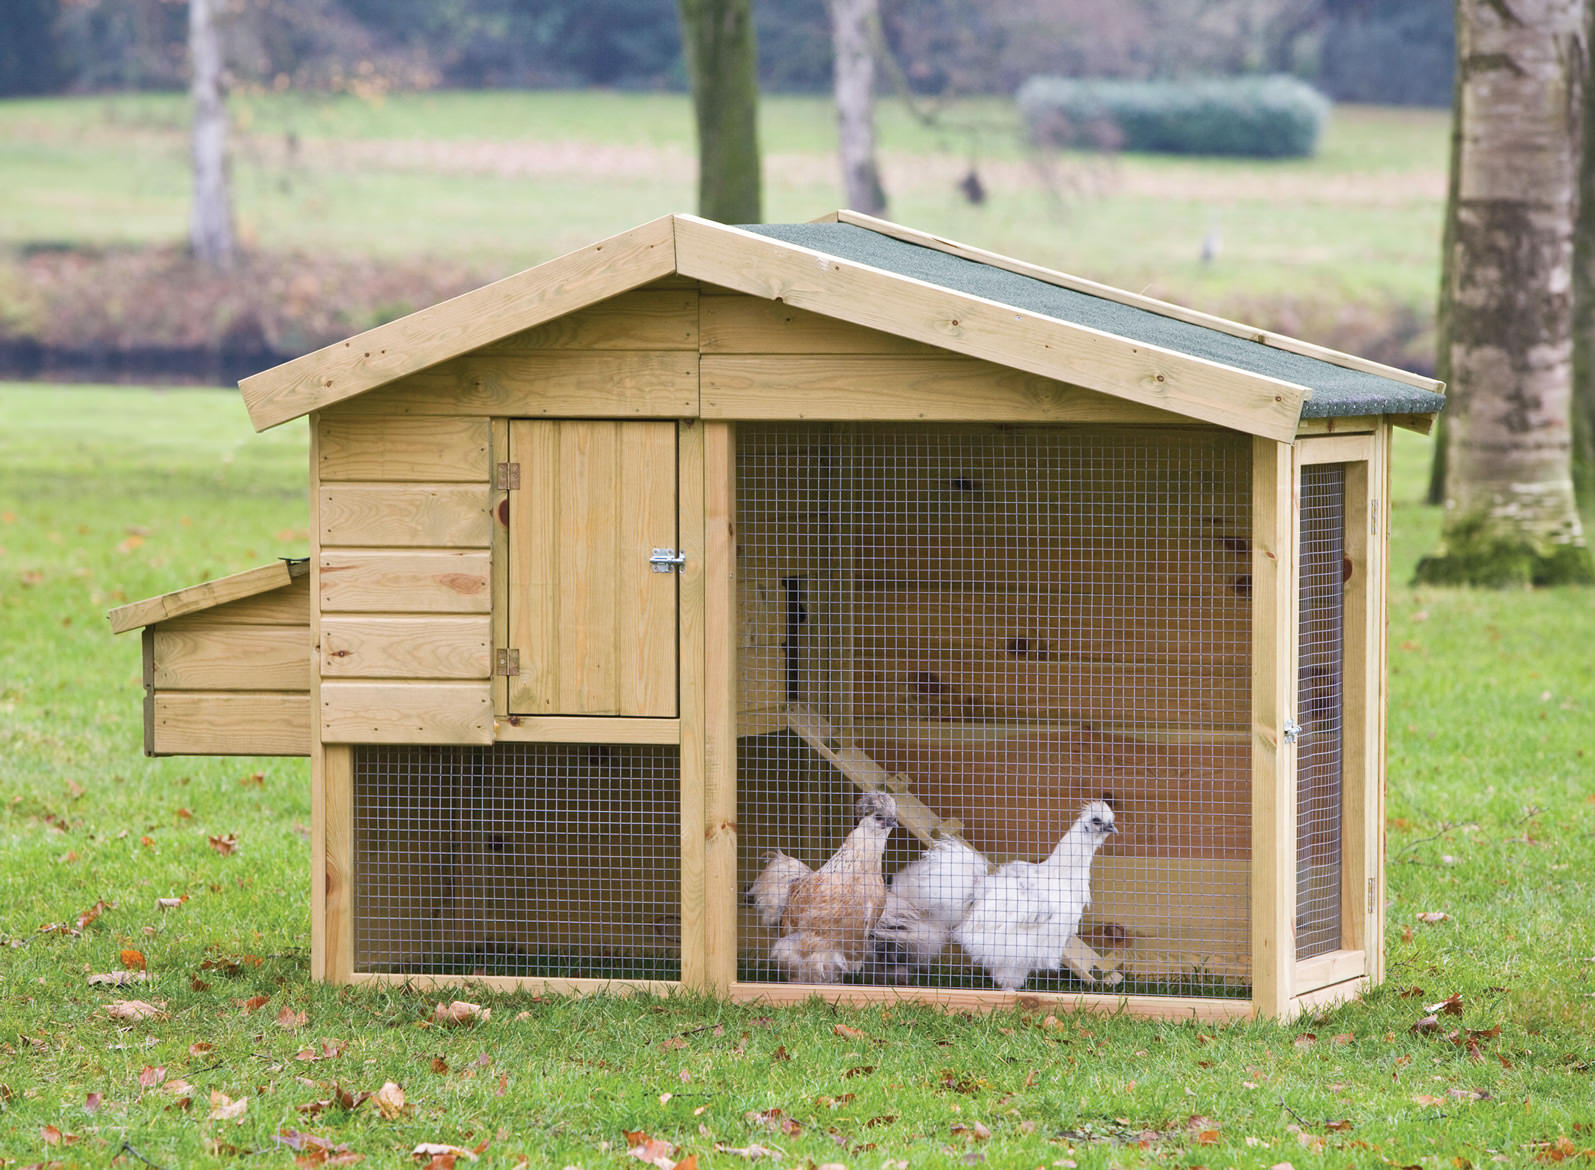 How To Build A Chicken Coop Instructions - Chicken Coop